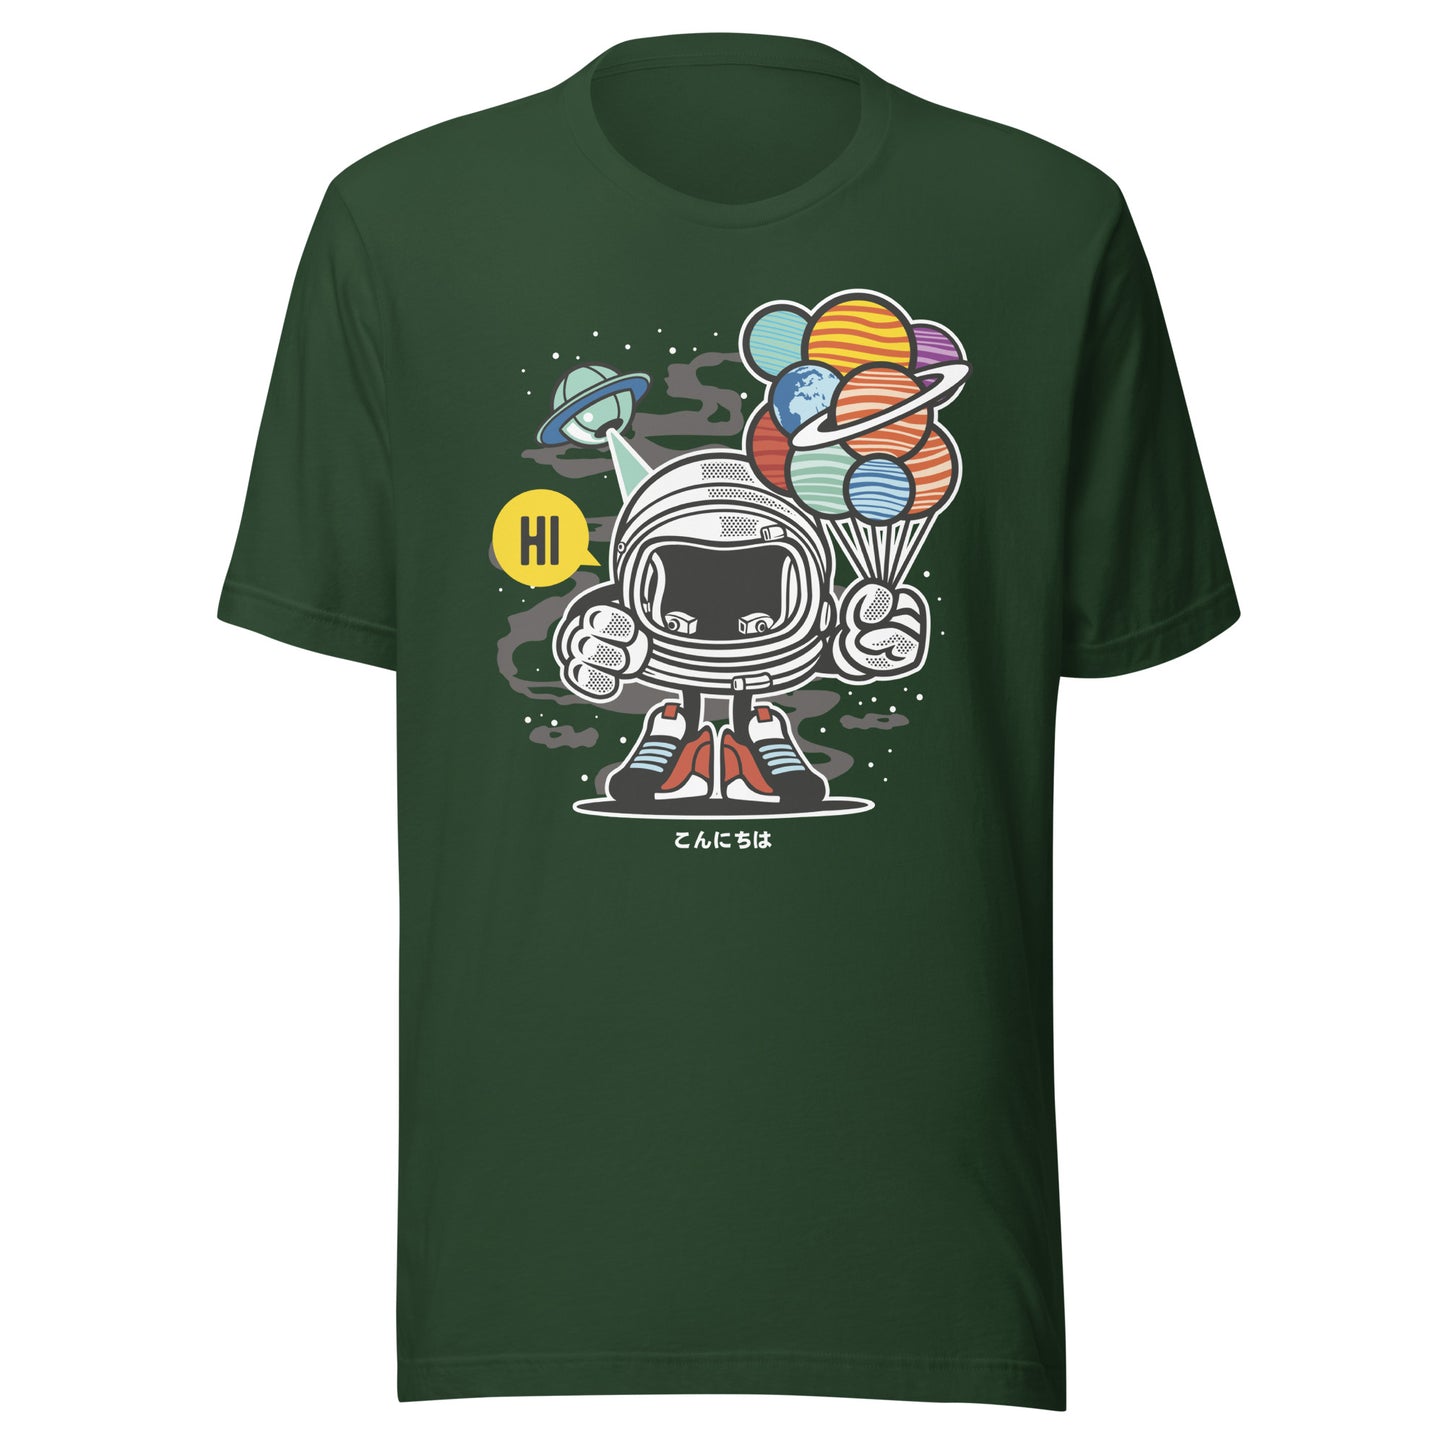 Unisex custom designed t-shirt